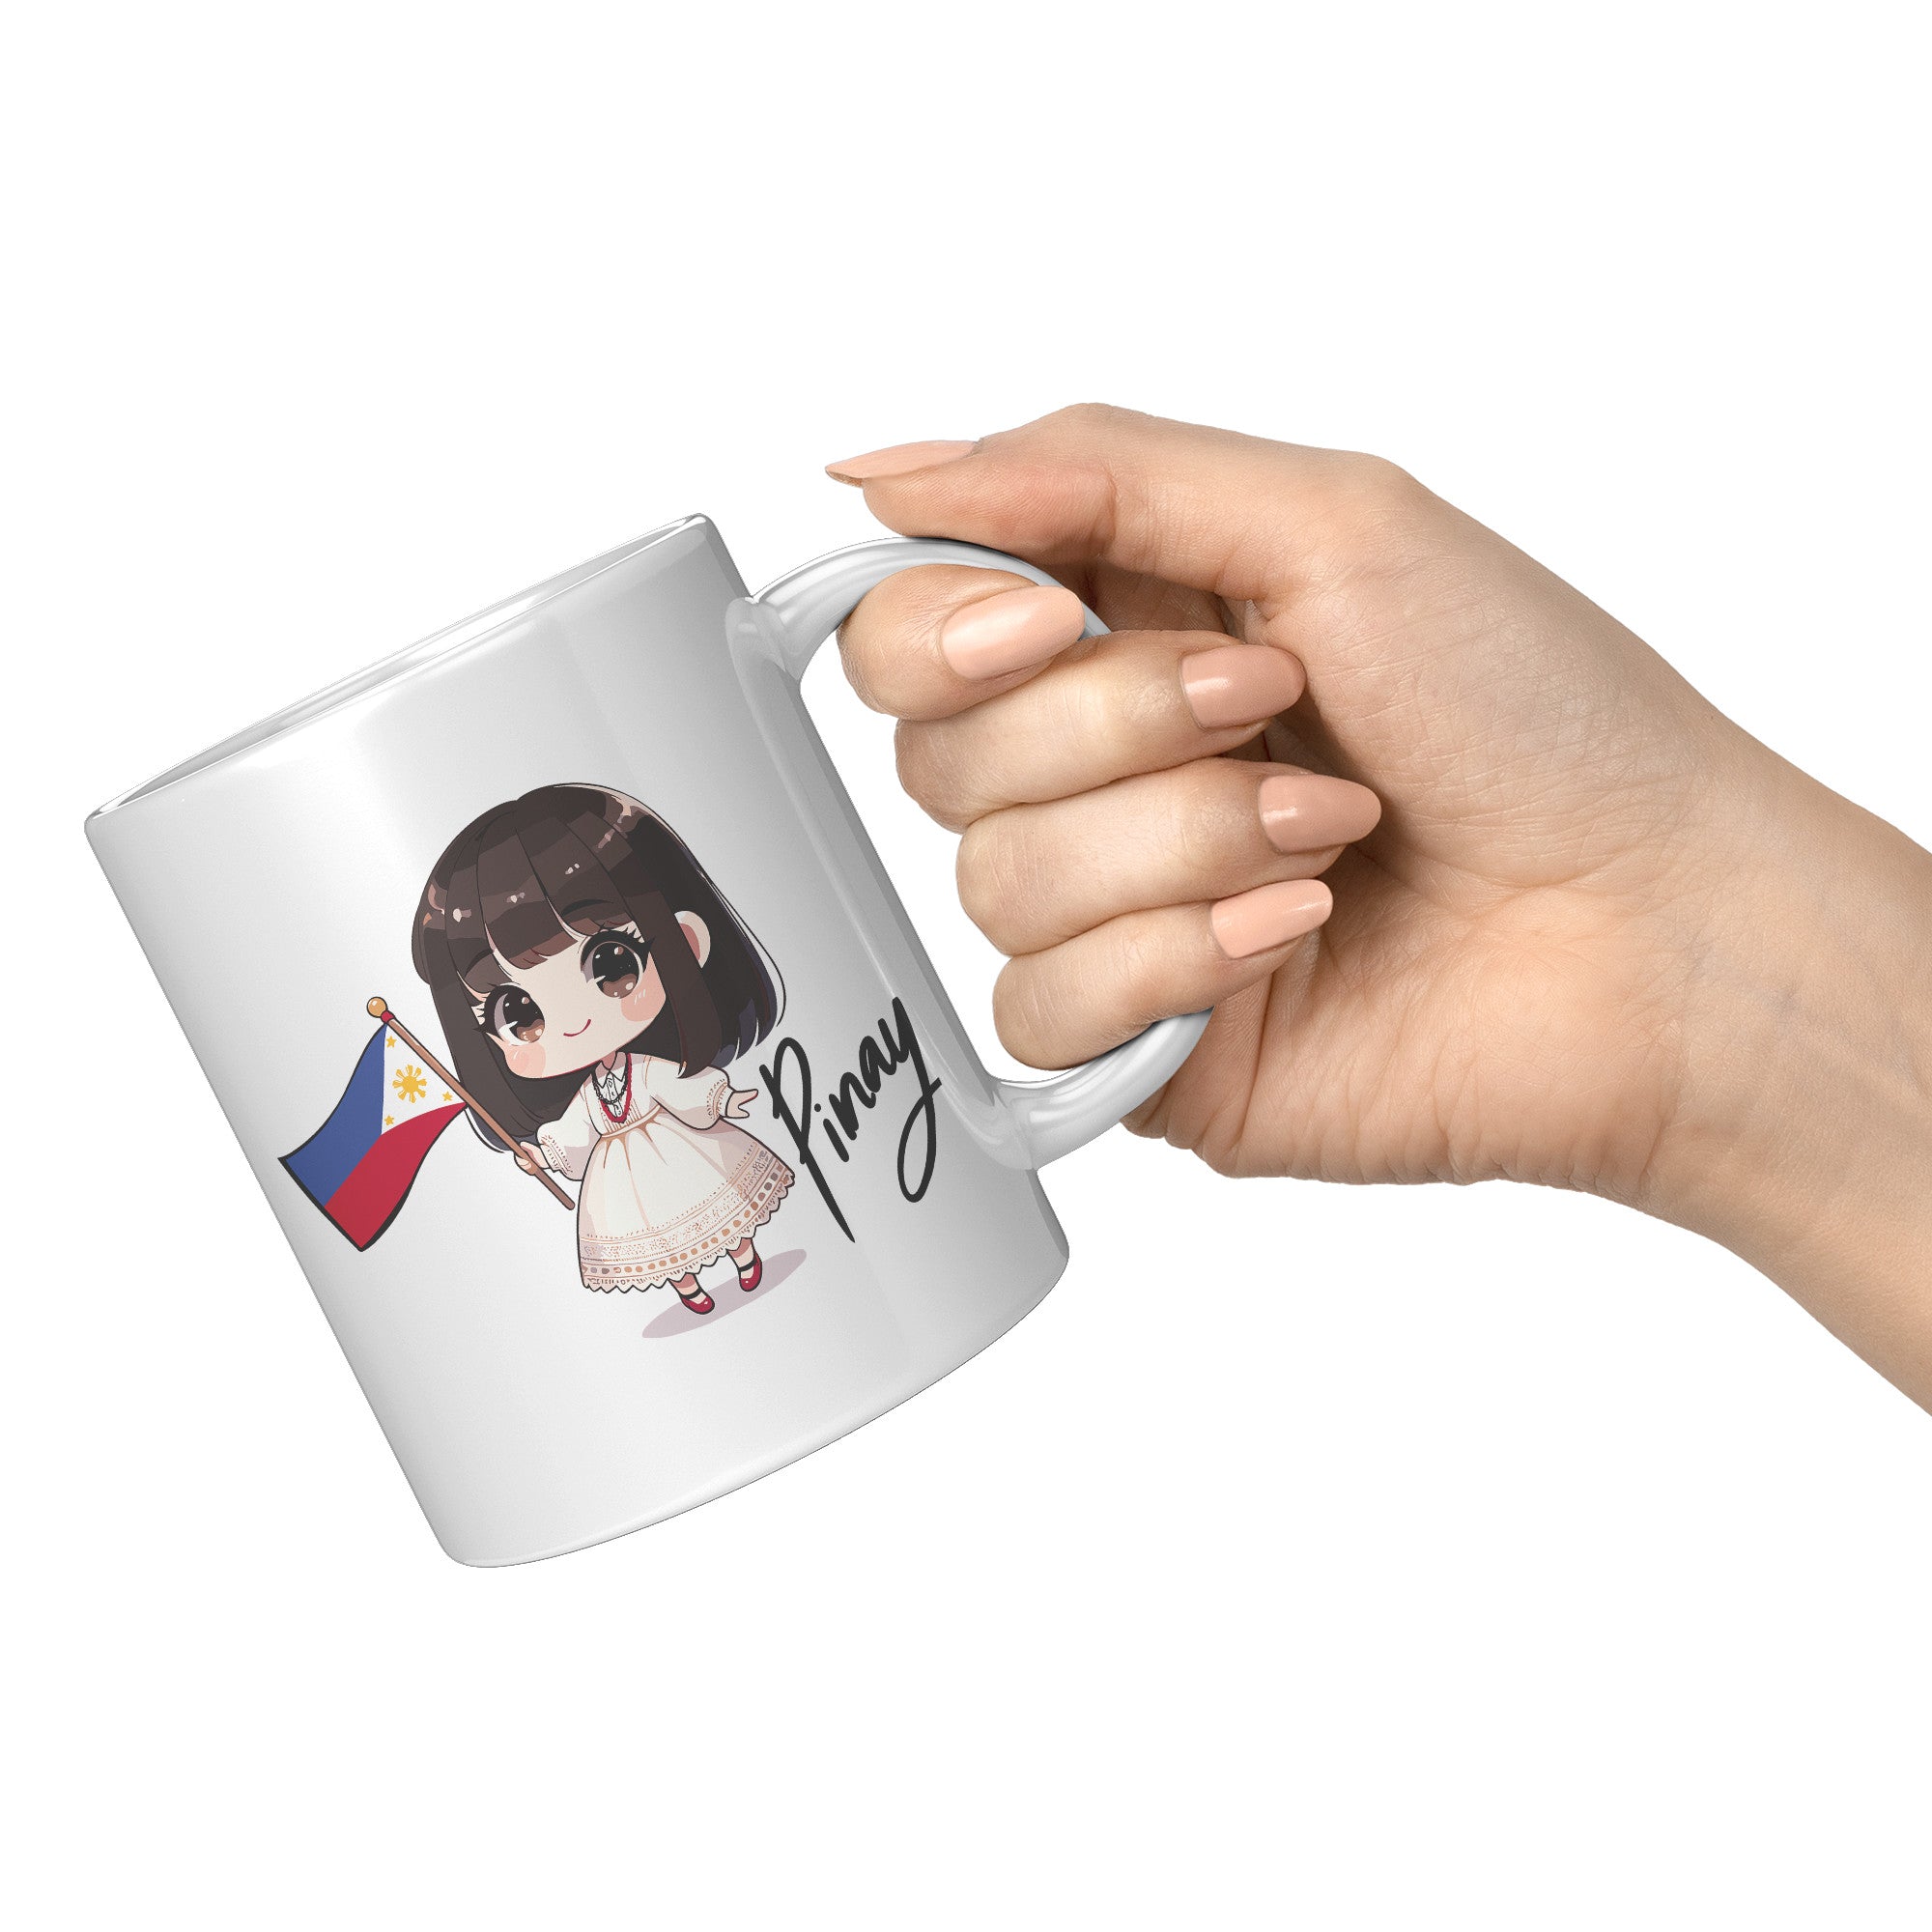 "Cute Cartoon Filipino Pride Coffee Mug - Vibrant Pinoy Pride Cup - Perfect Gift for Filipinos - Colorful Philippines Heritage Mug" - I